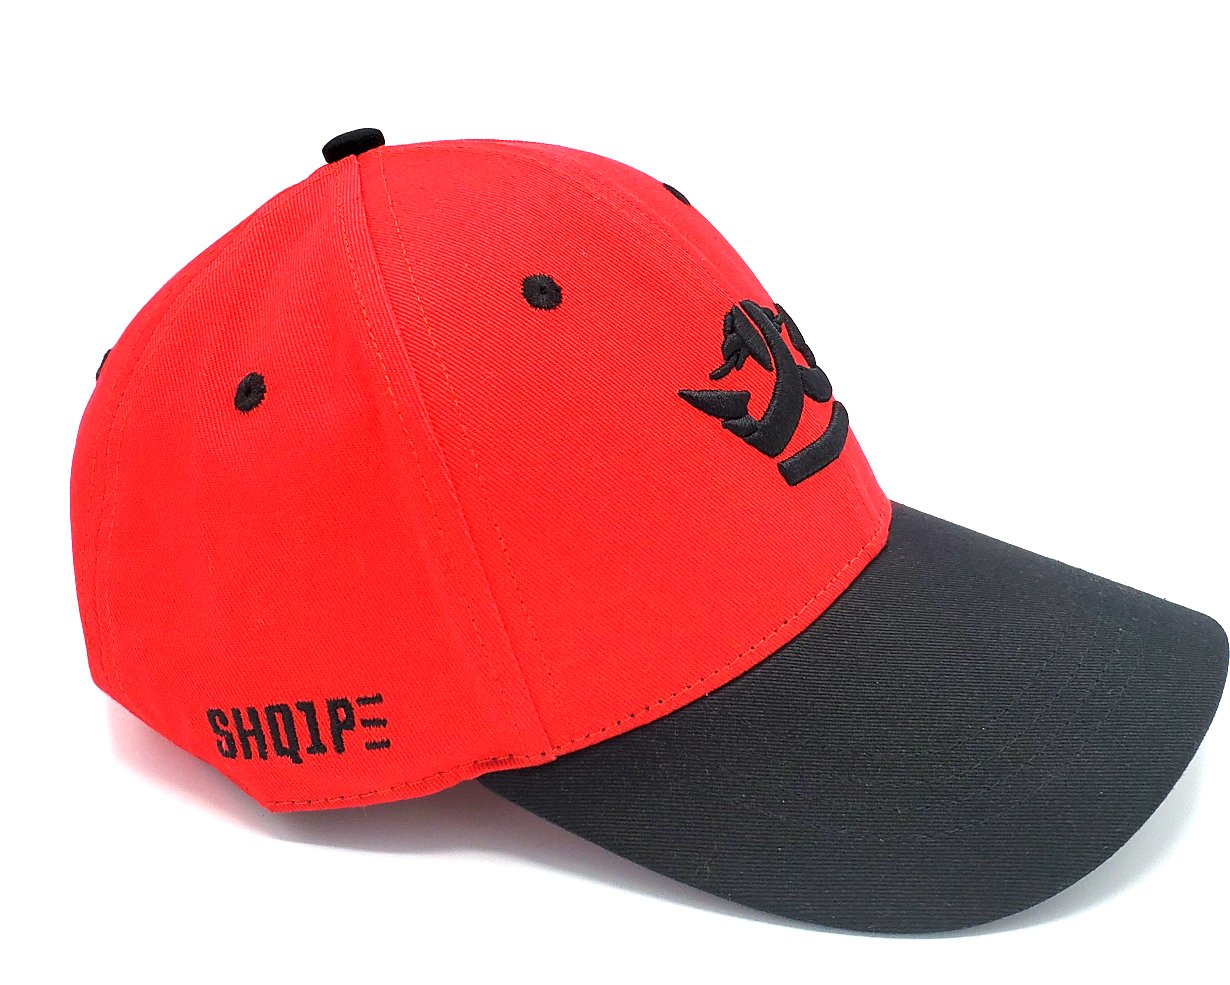 1st Edition Shq1pe Baseball Cap Red/Black Brim